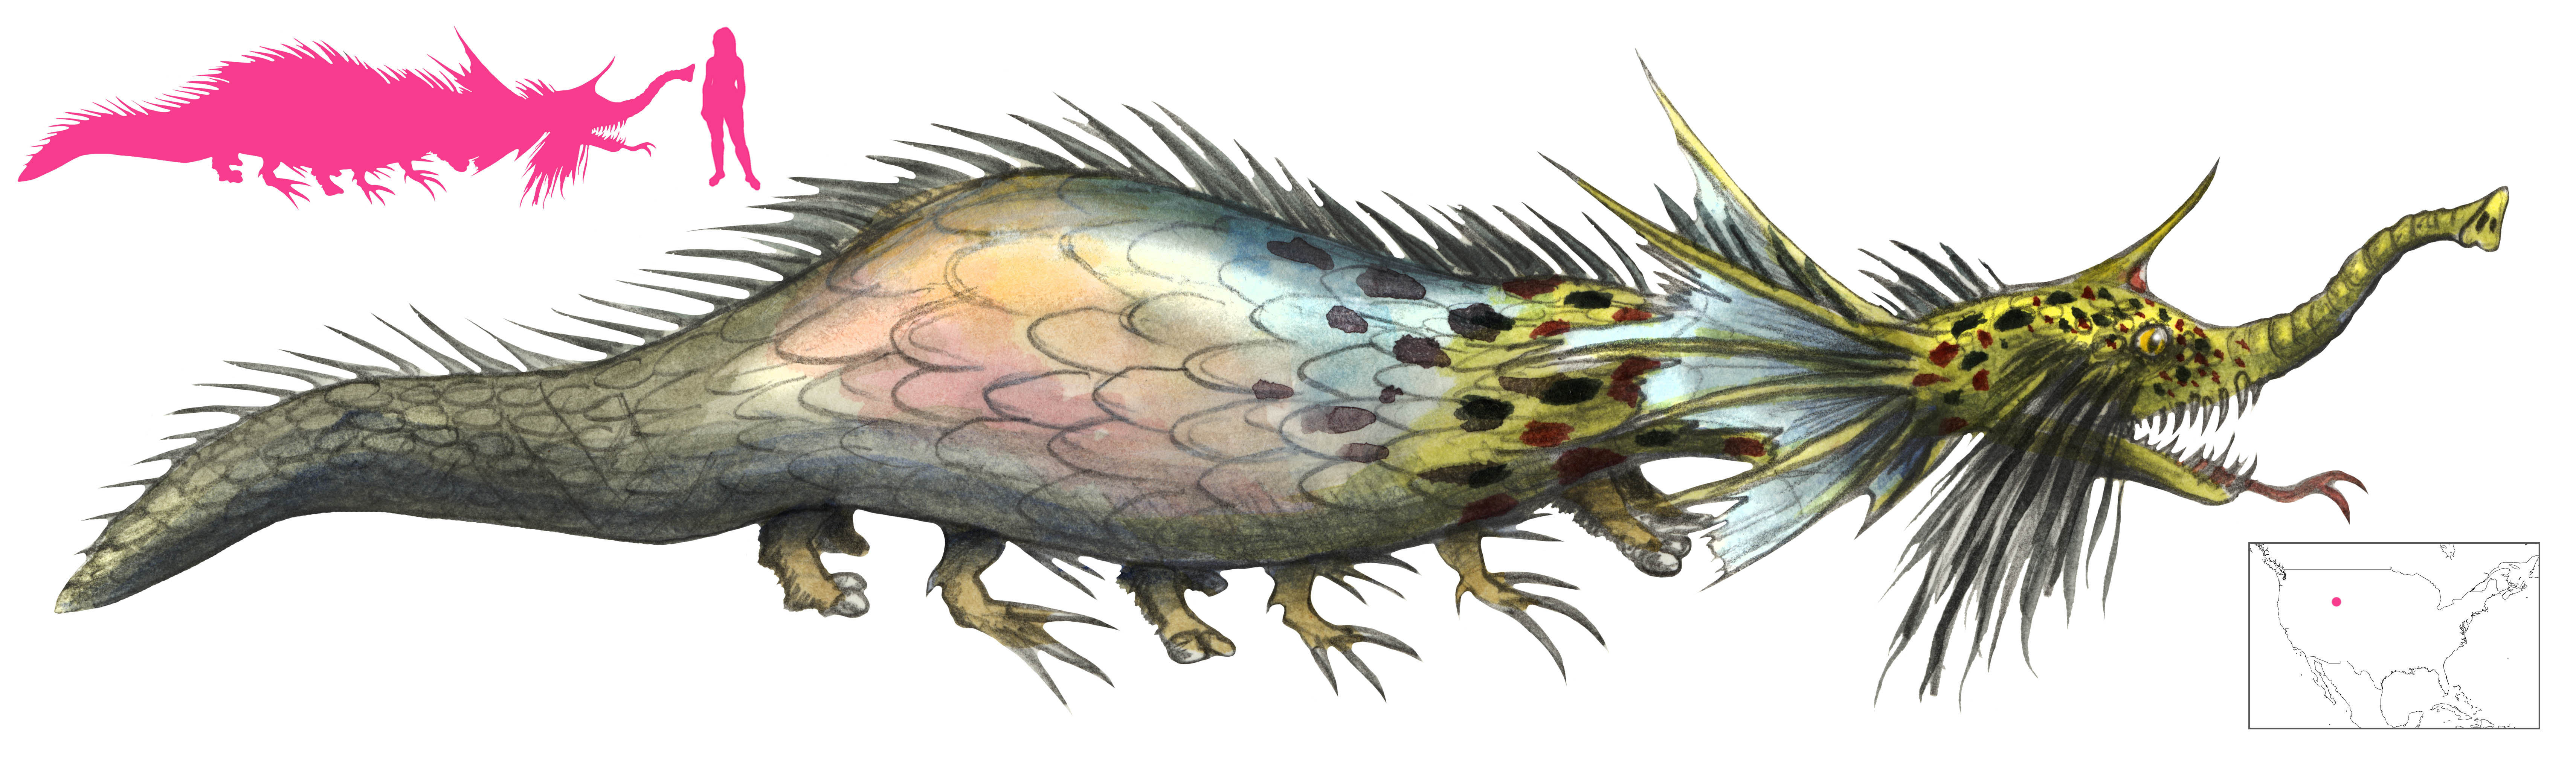 Creatures of sonaria monster kaiju animal. Ankylosaurus sonaria. Eulopii на пальце creature of sonaria. Картинки существ sonaria.